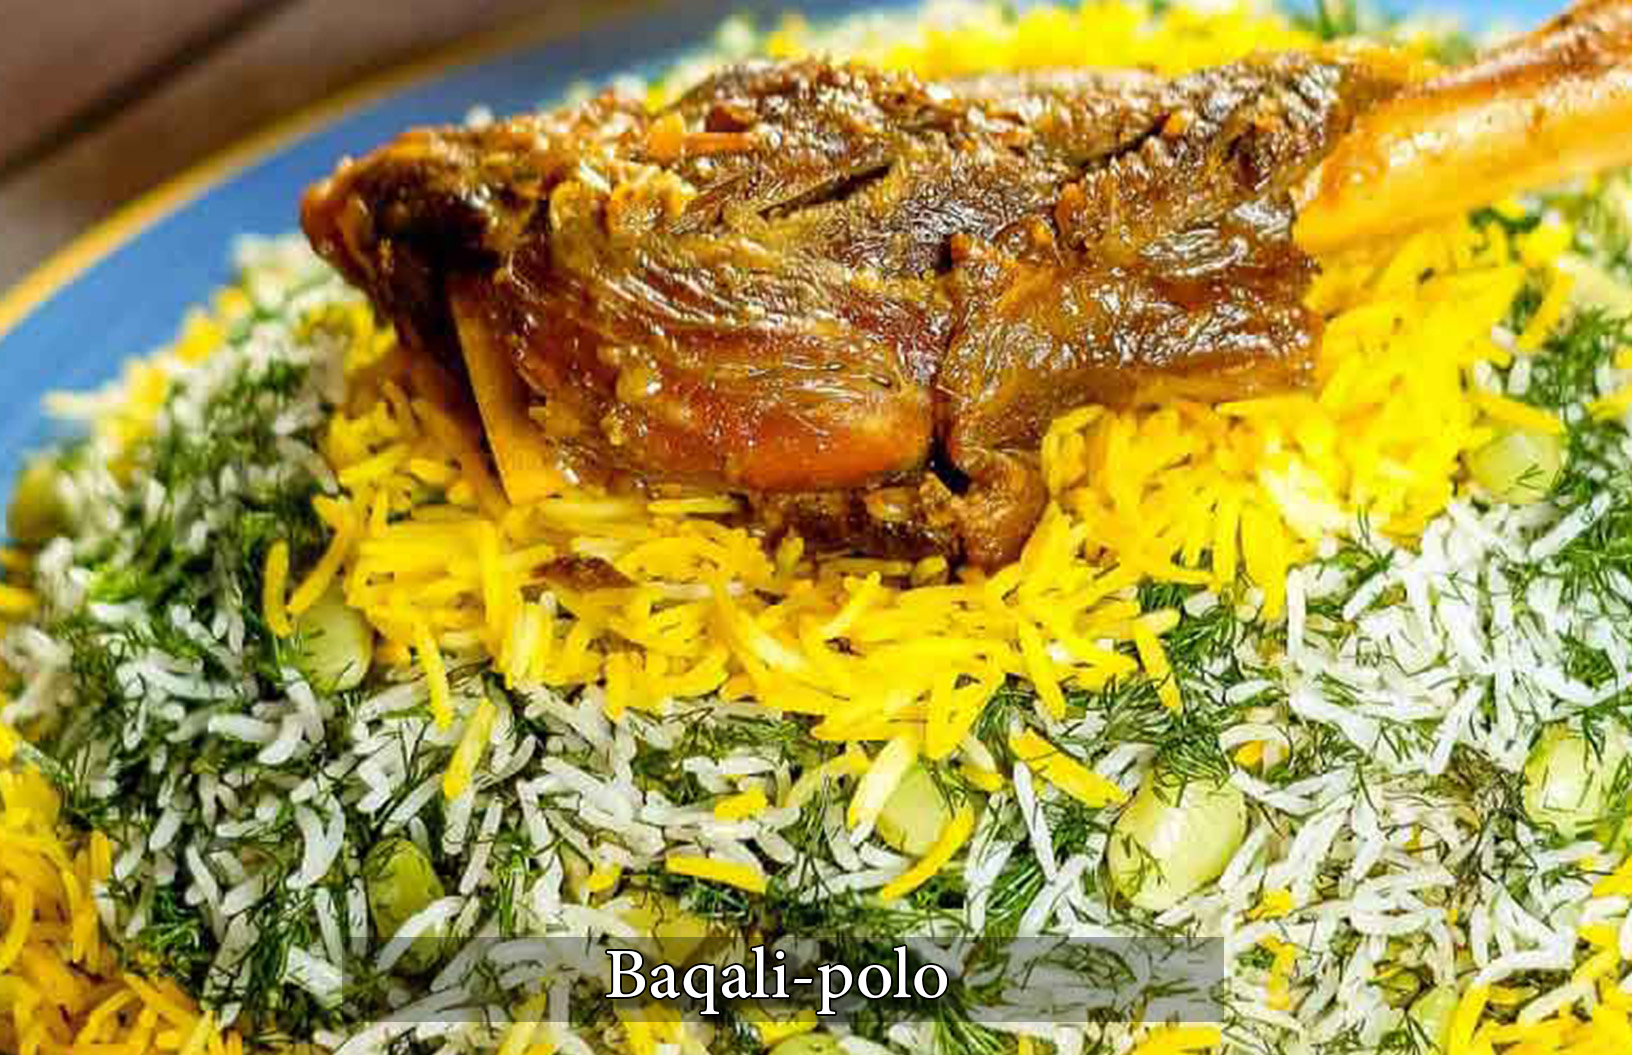 Baqali-polo Iranian food